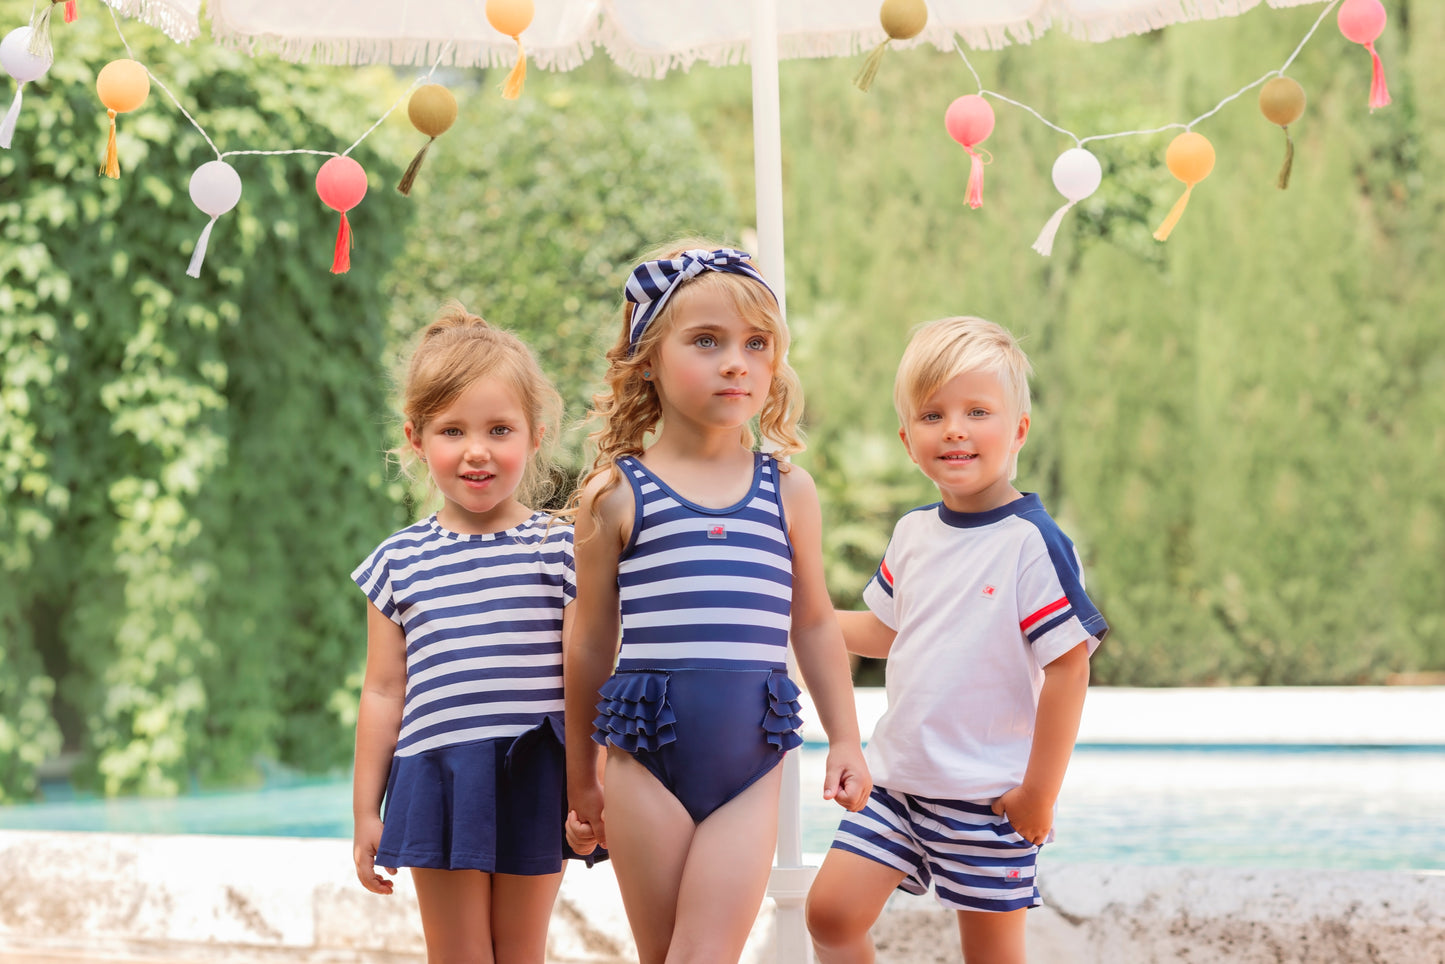 MIRANDA Sailor Navy Stripe Girls Swimsuit - 421B